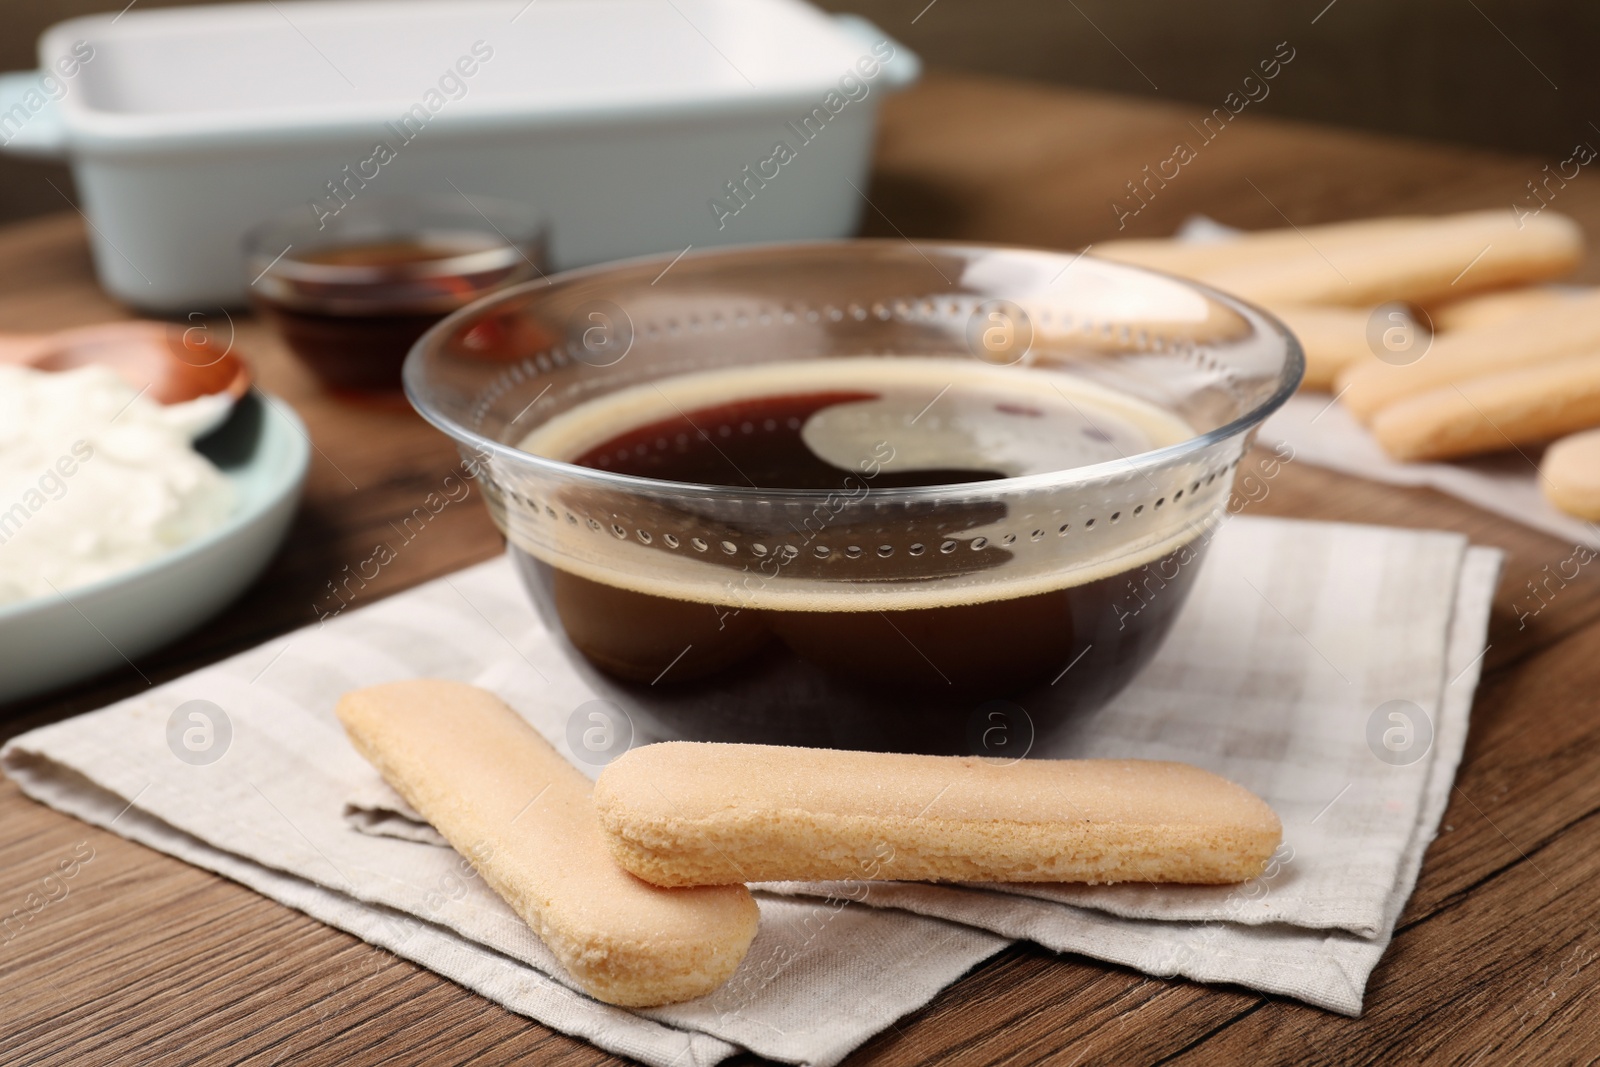 Photo of Bowl of coffee and savoiardi biscuit cookies on wooden table. Making tiramisu cake